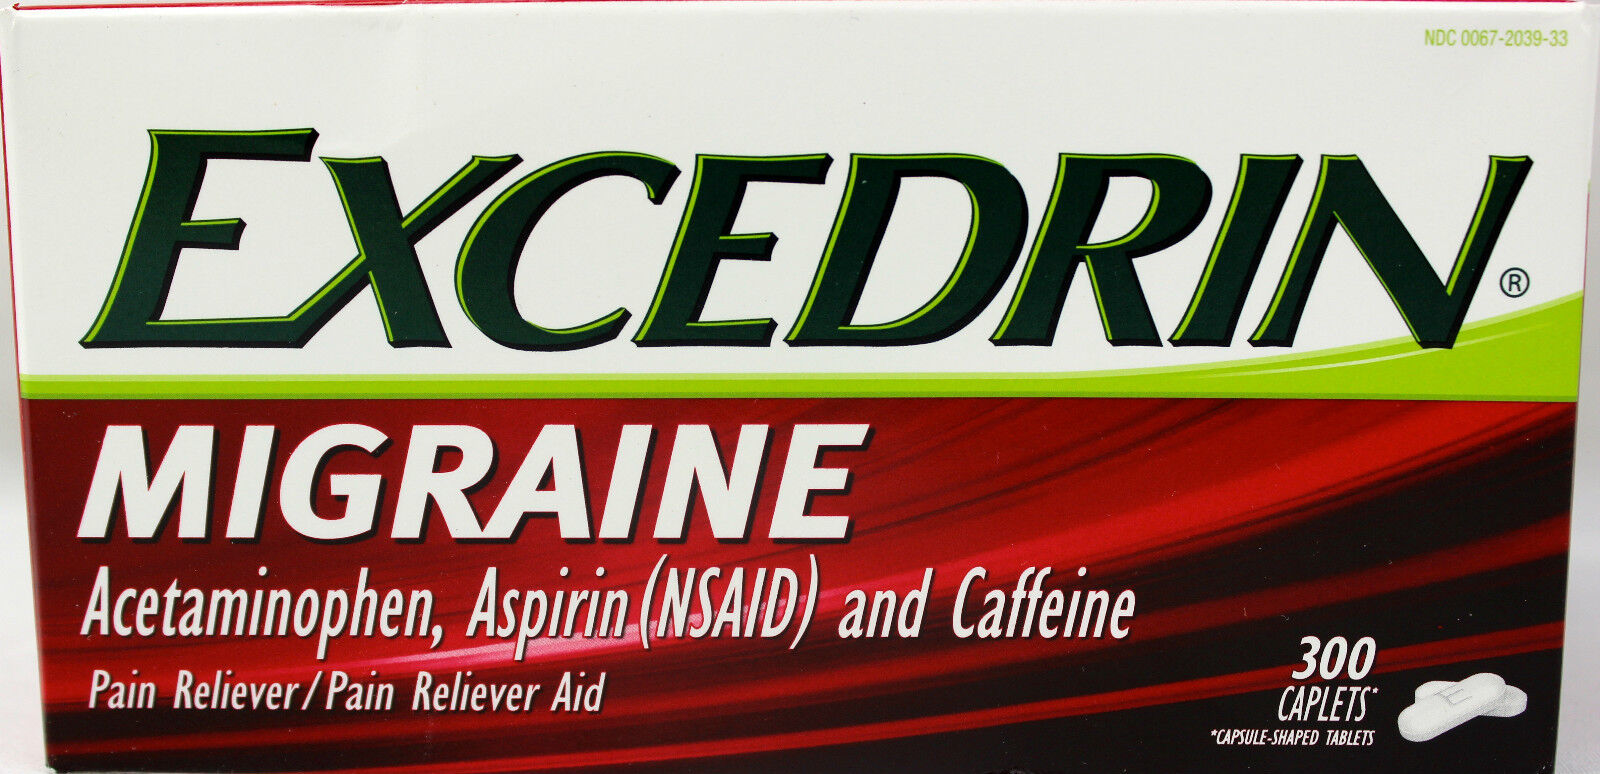 EXCEDRIN MIGRAINE Pain Reliever Aspirin Acetaminophen Caffeine, 300 Caplets